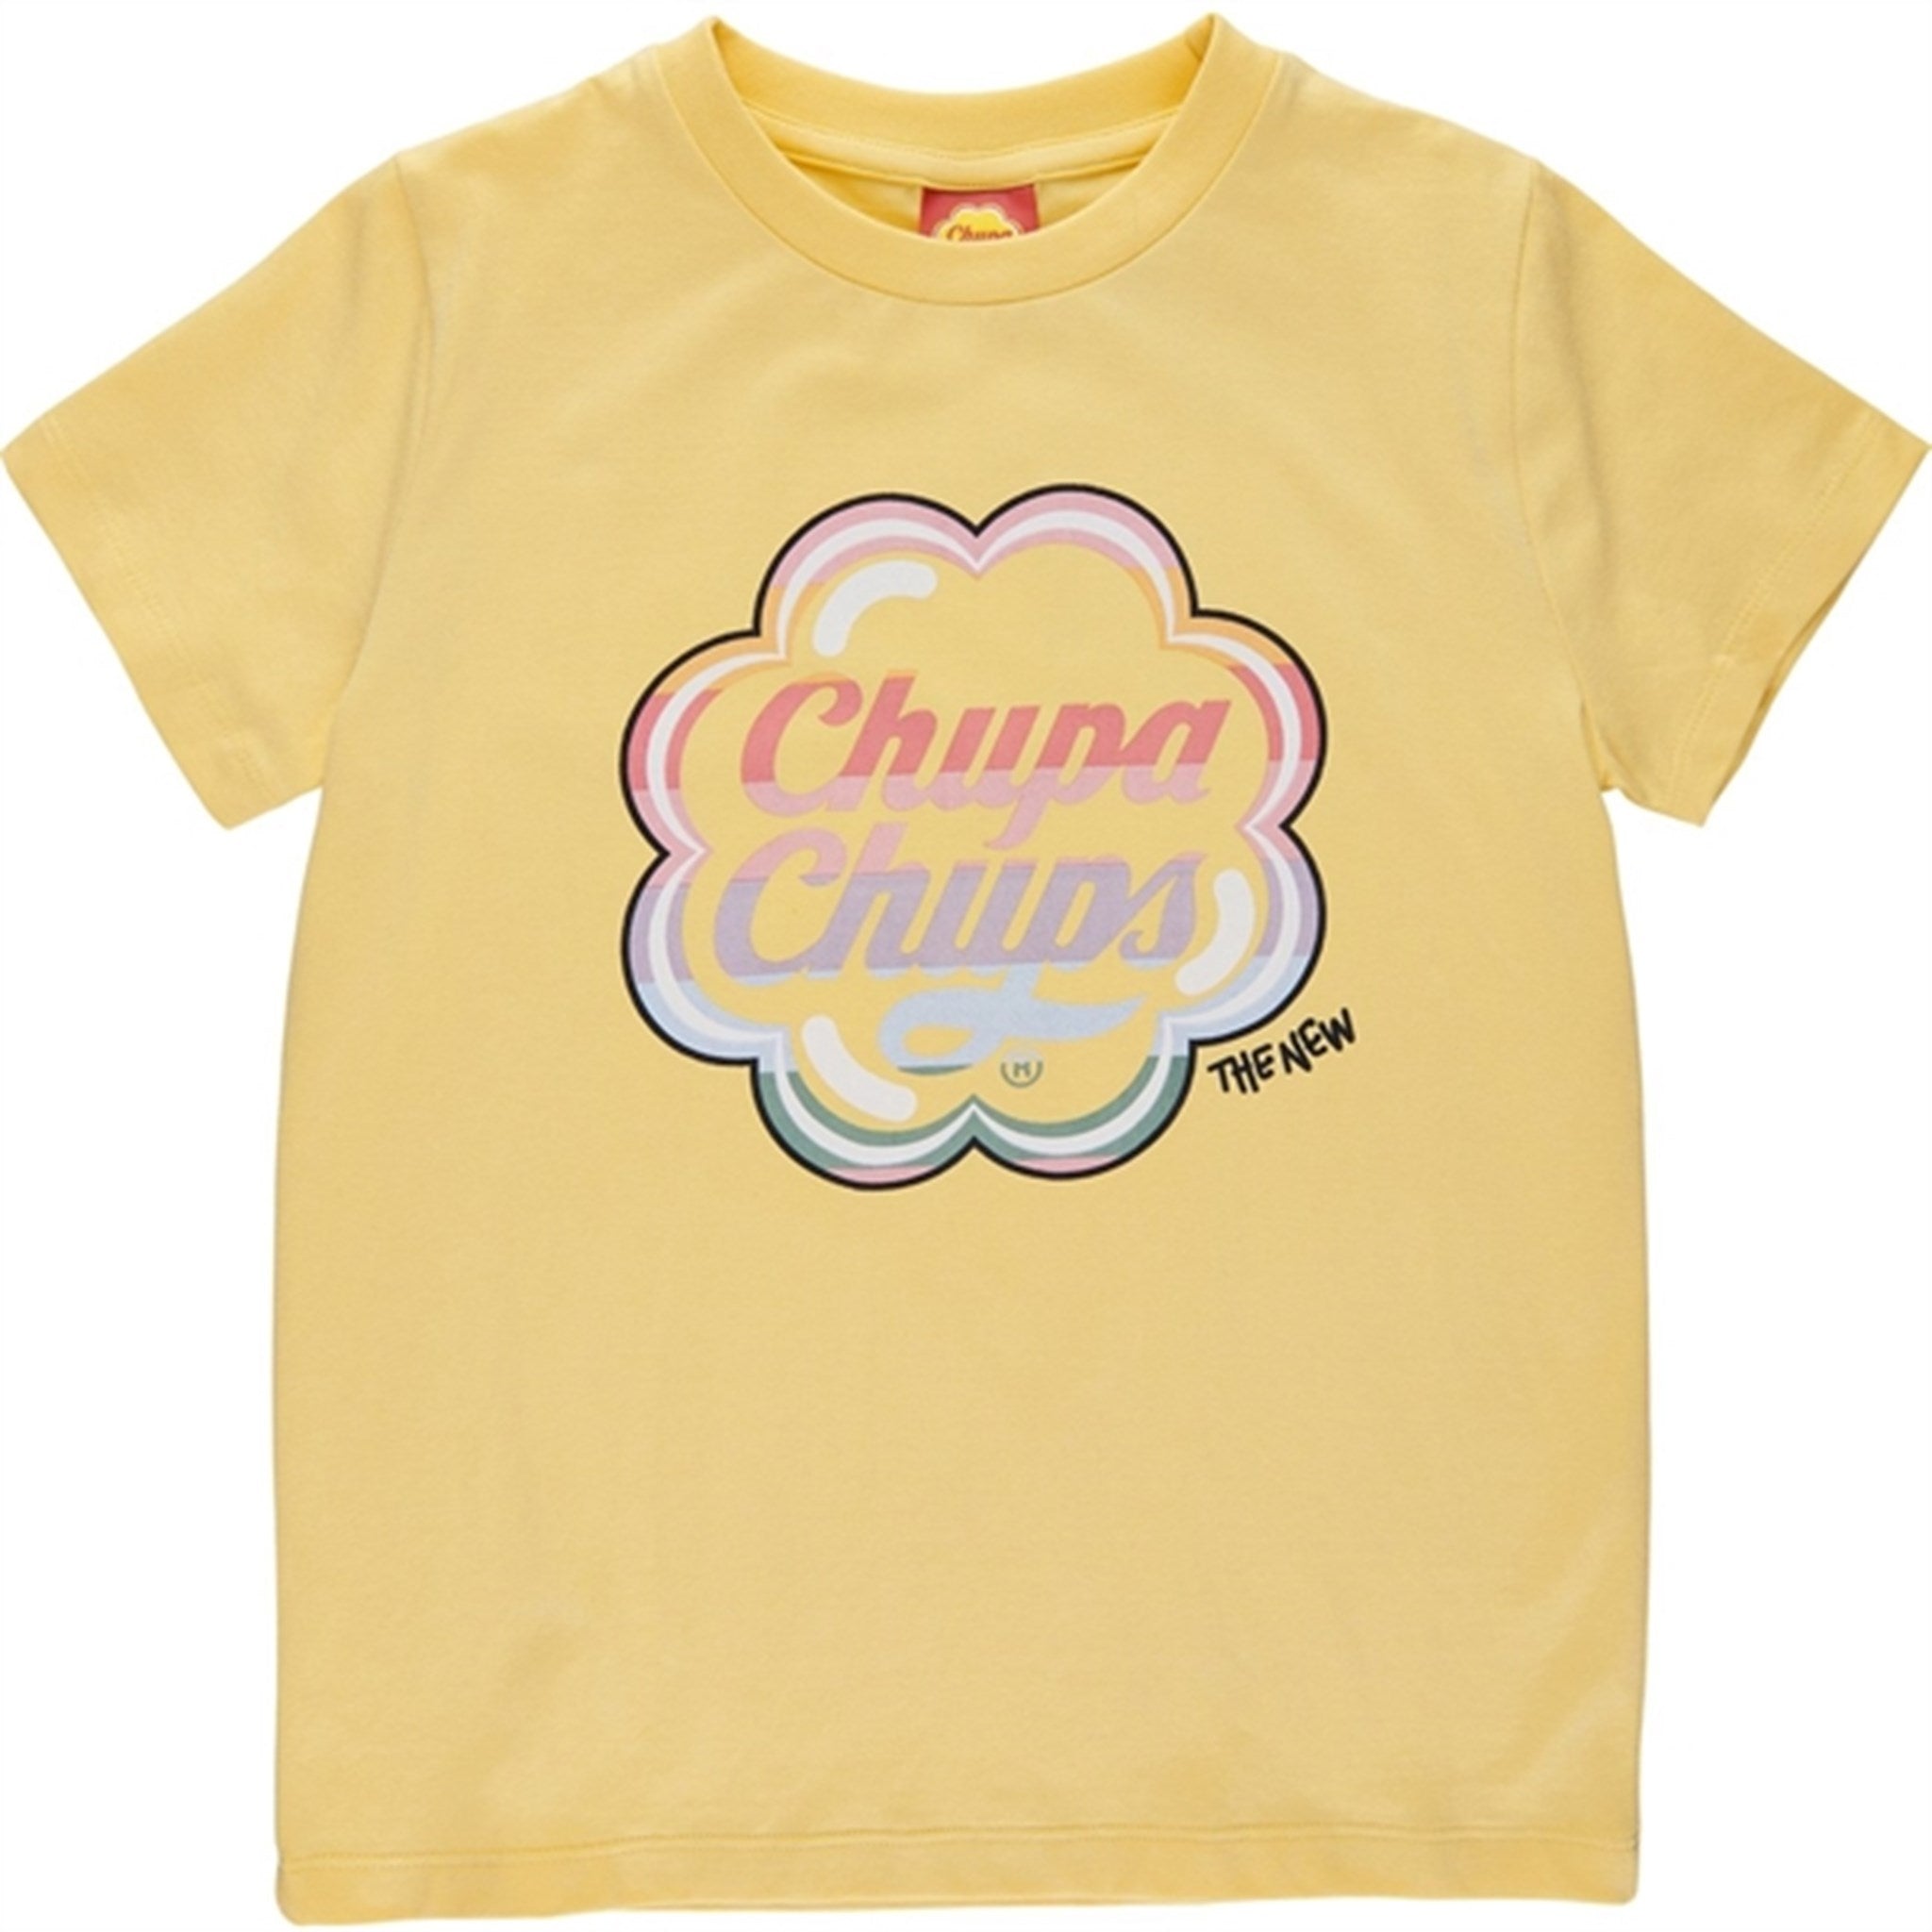 THE NEW Sunlight Chupa Chups T-shirt